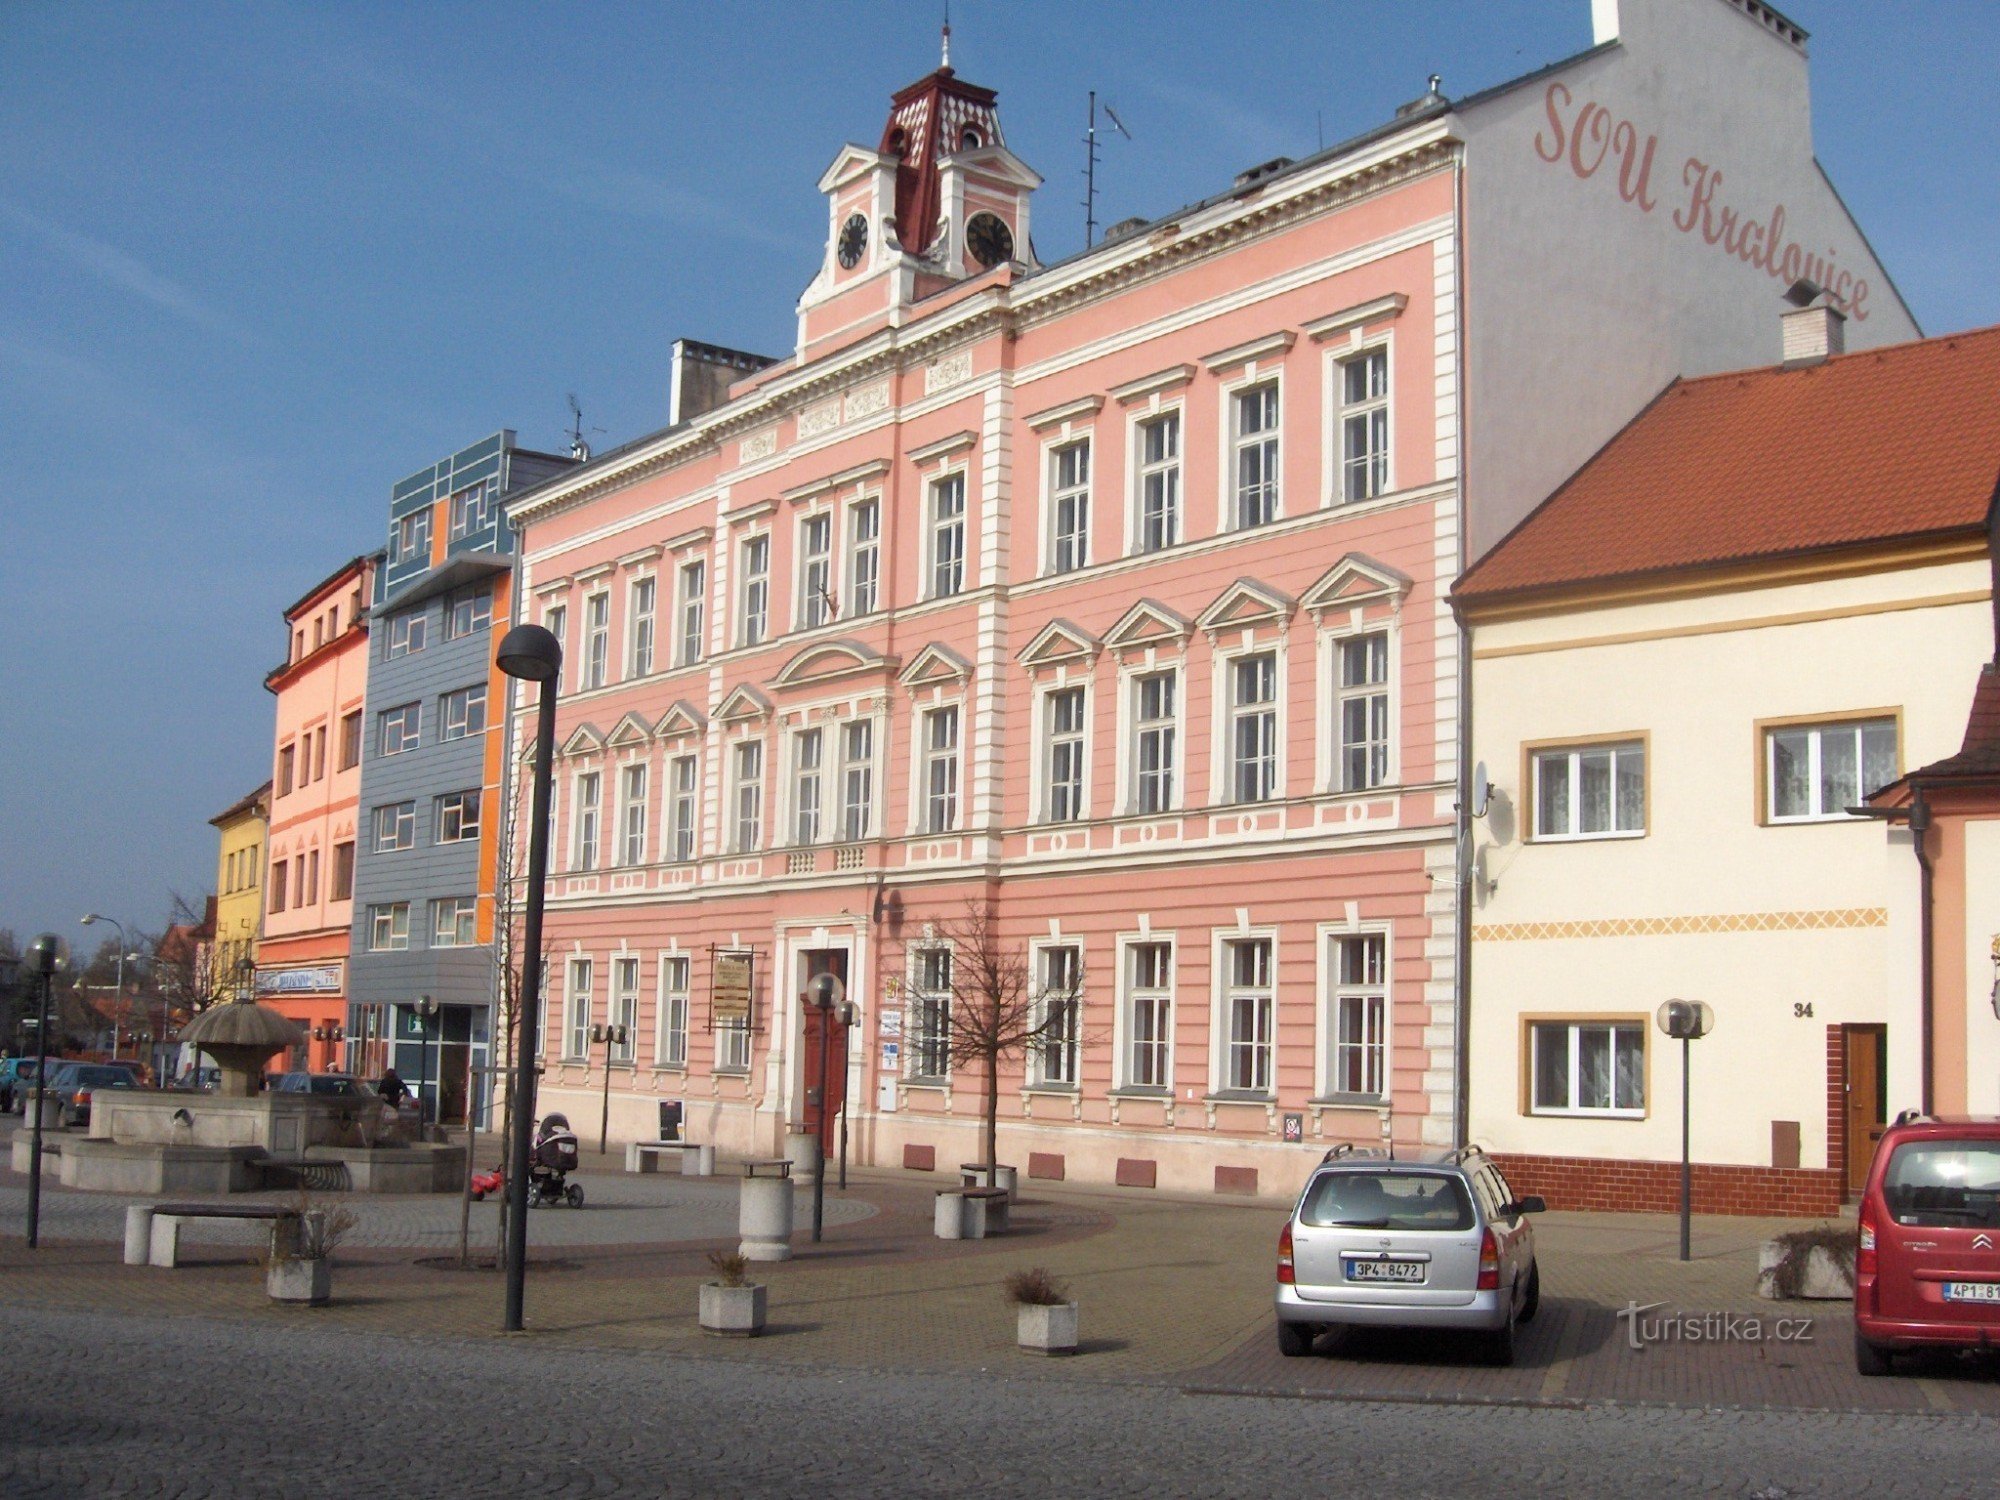 Quảng trường Kralovice